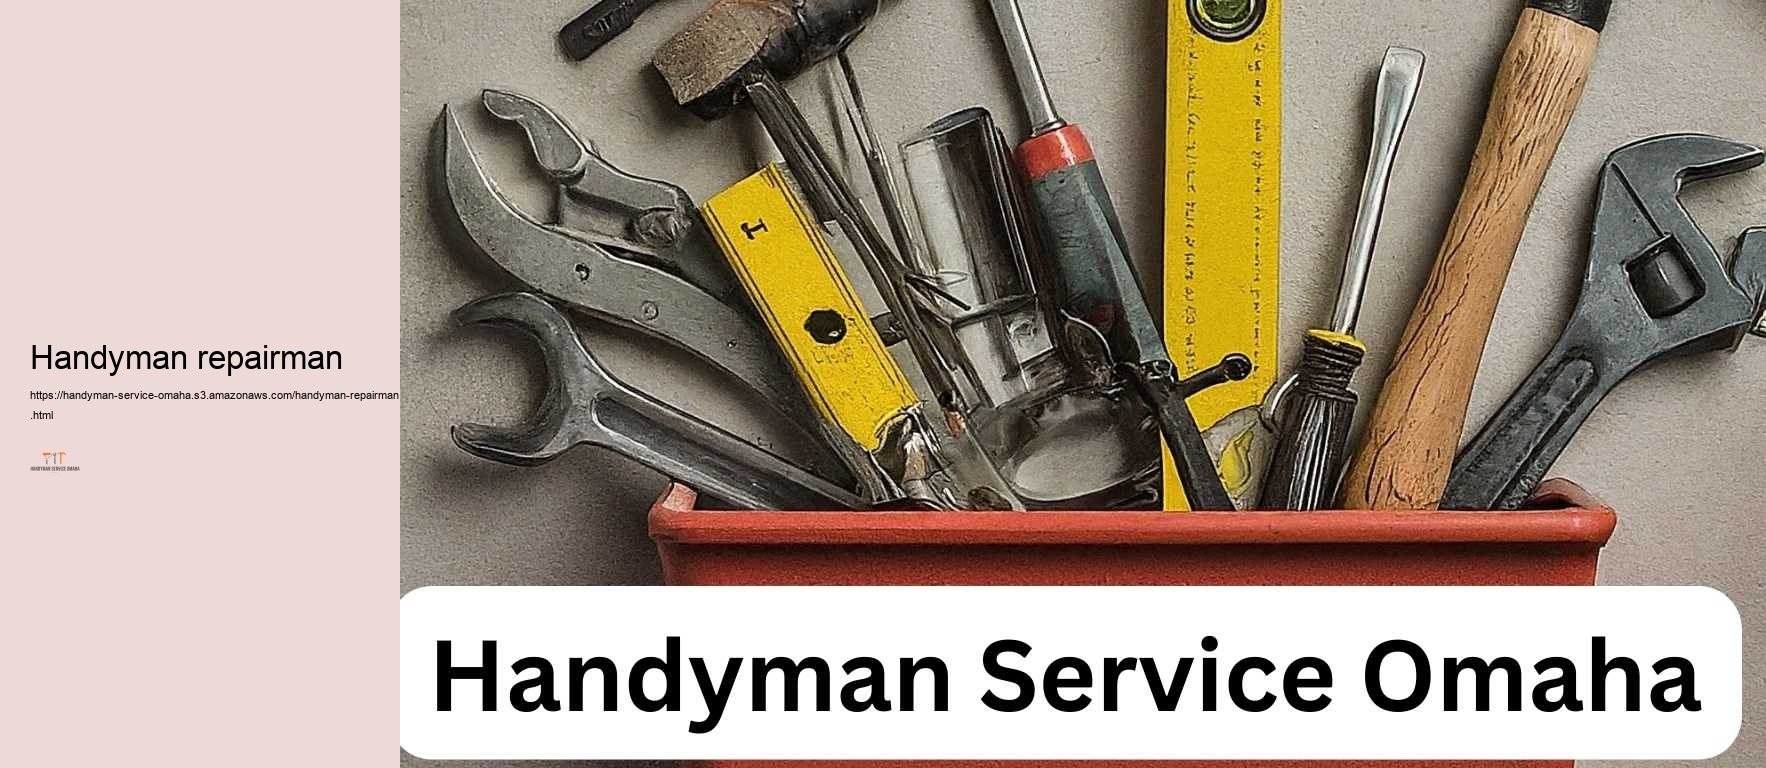 Handyman repairman